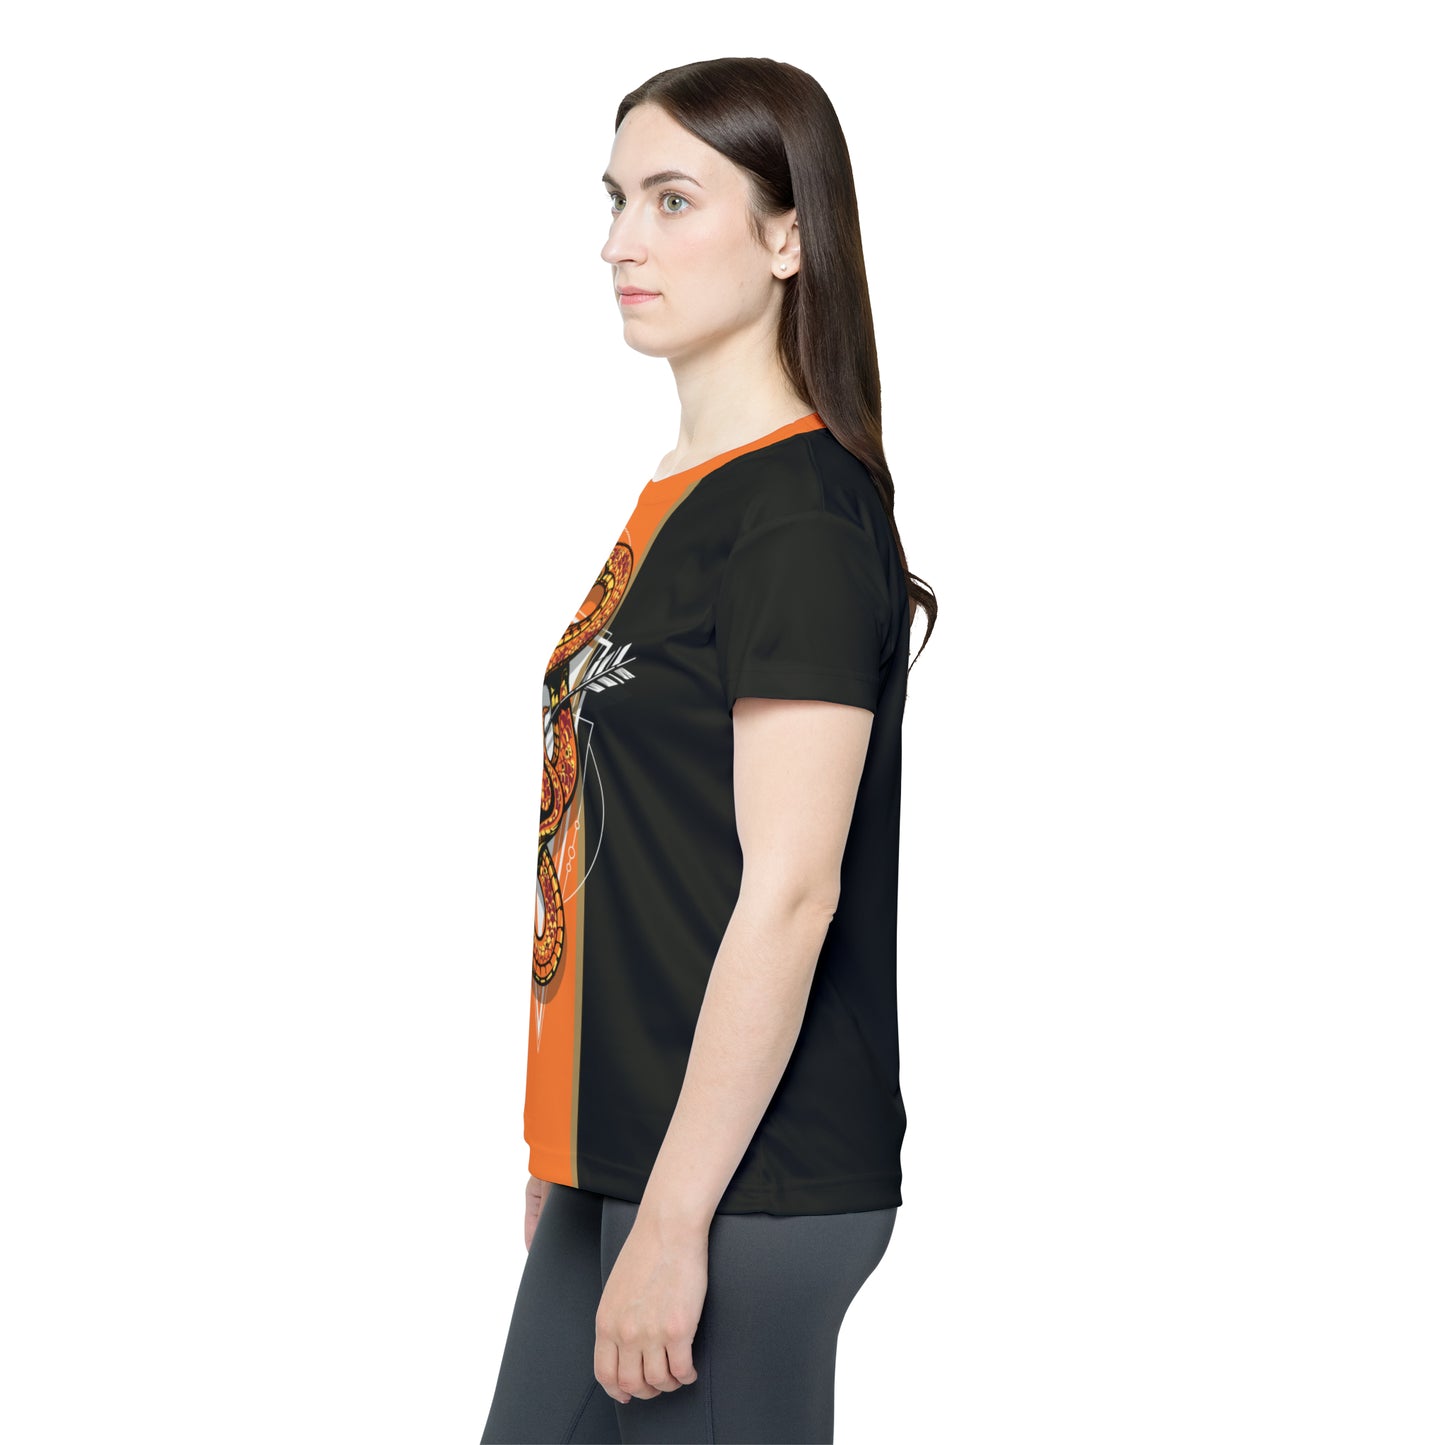 Viper Women's Performance T-shirt Black Edition